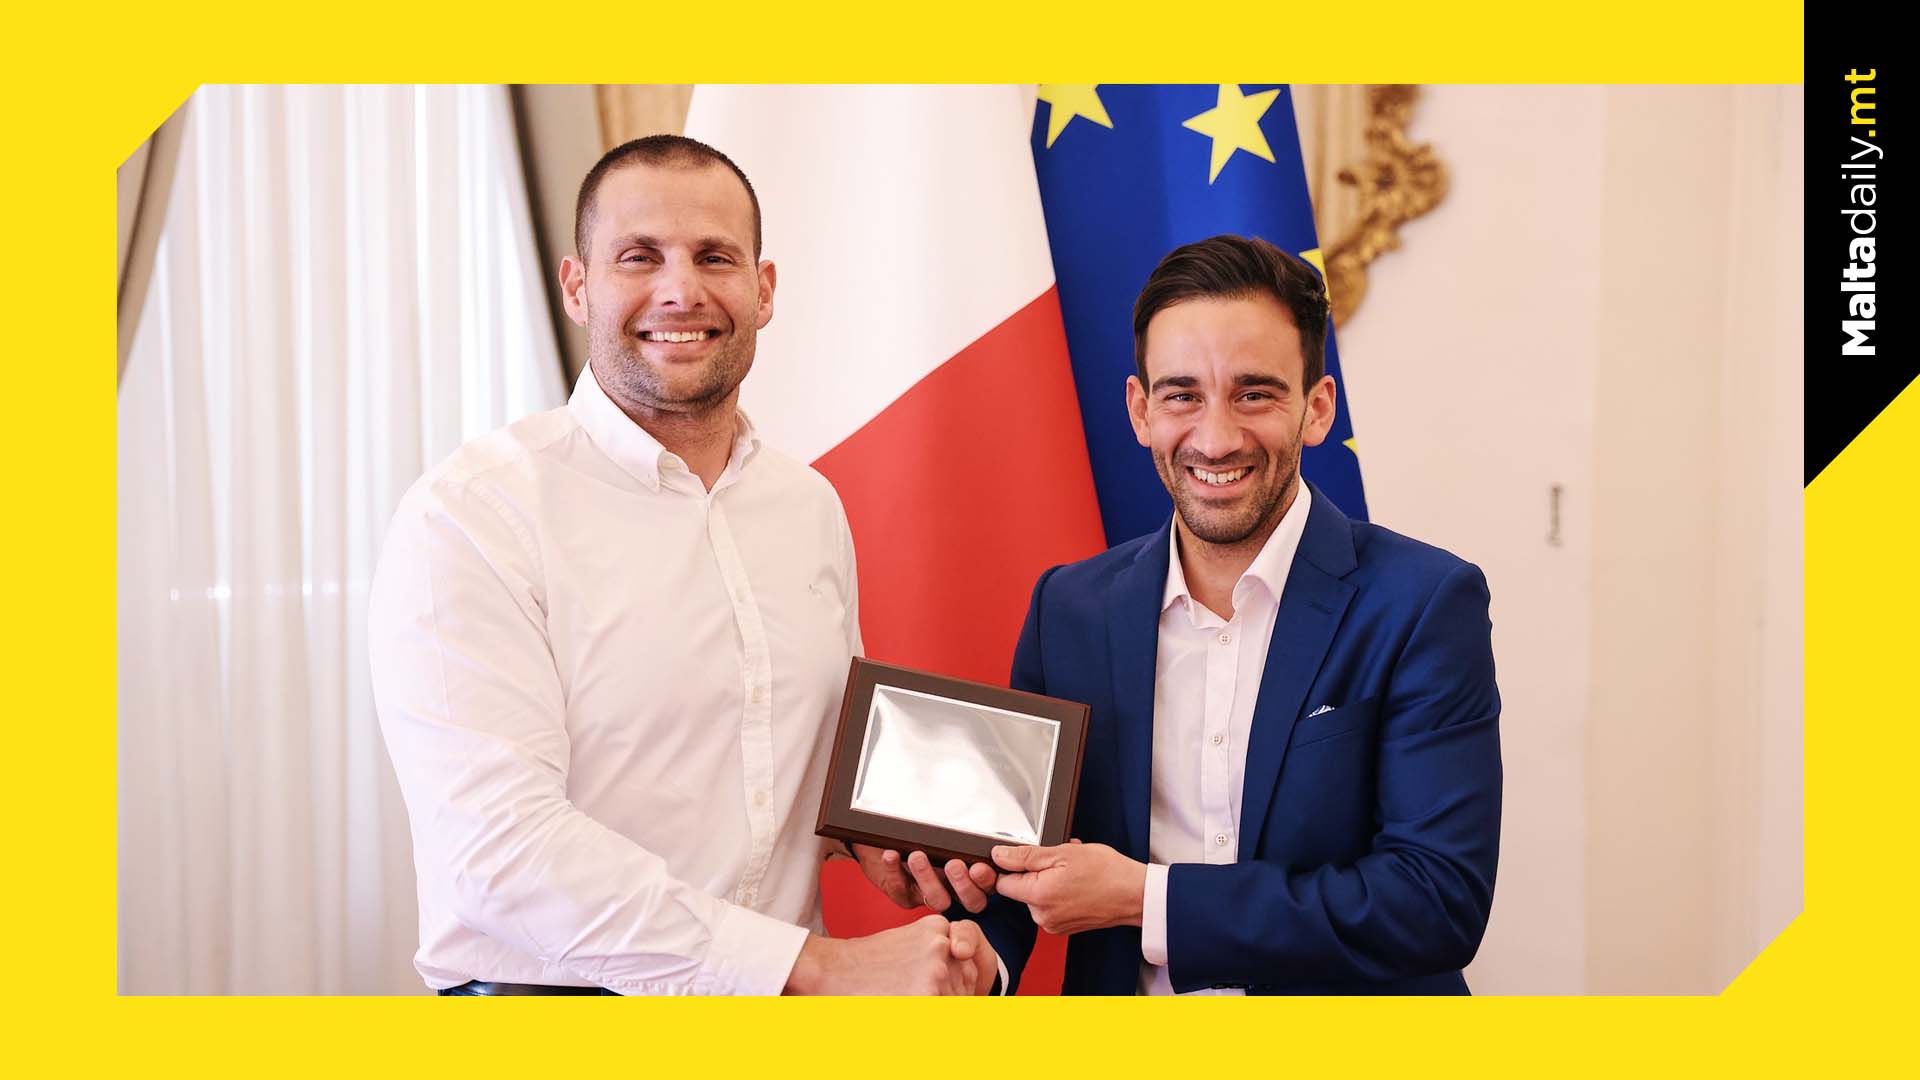 Gianluca Bezzina awarded by Prime Minister for Mużika Mużika win